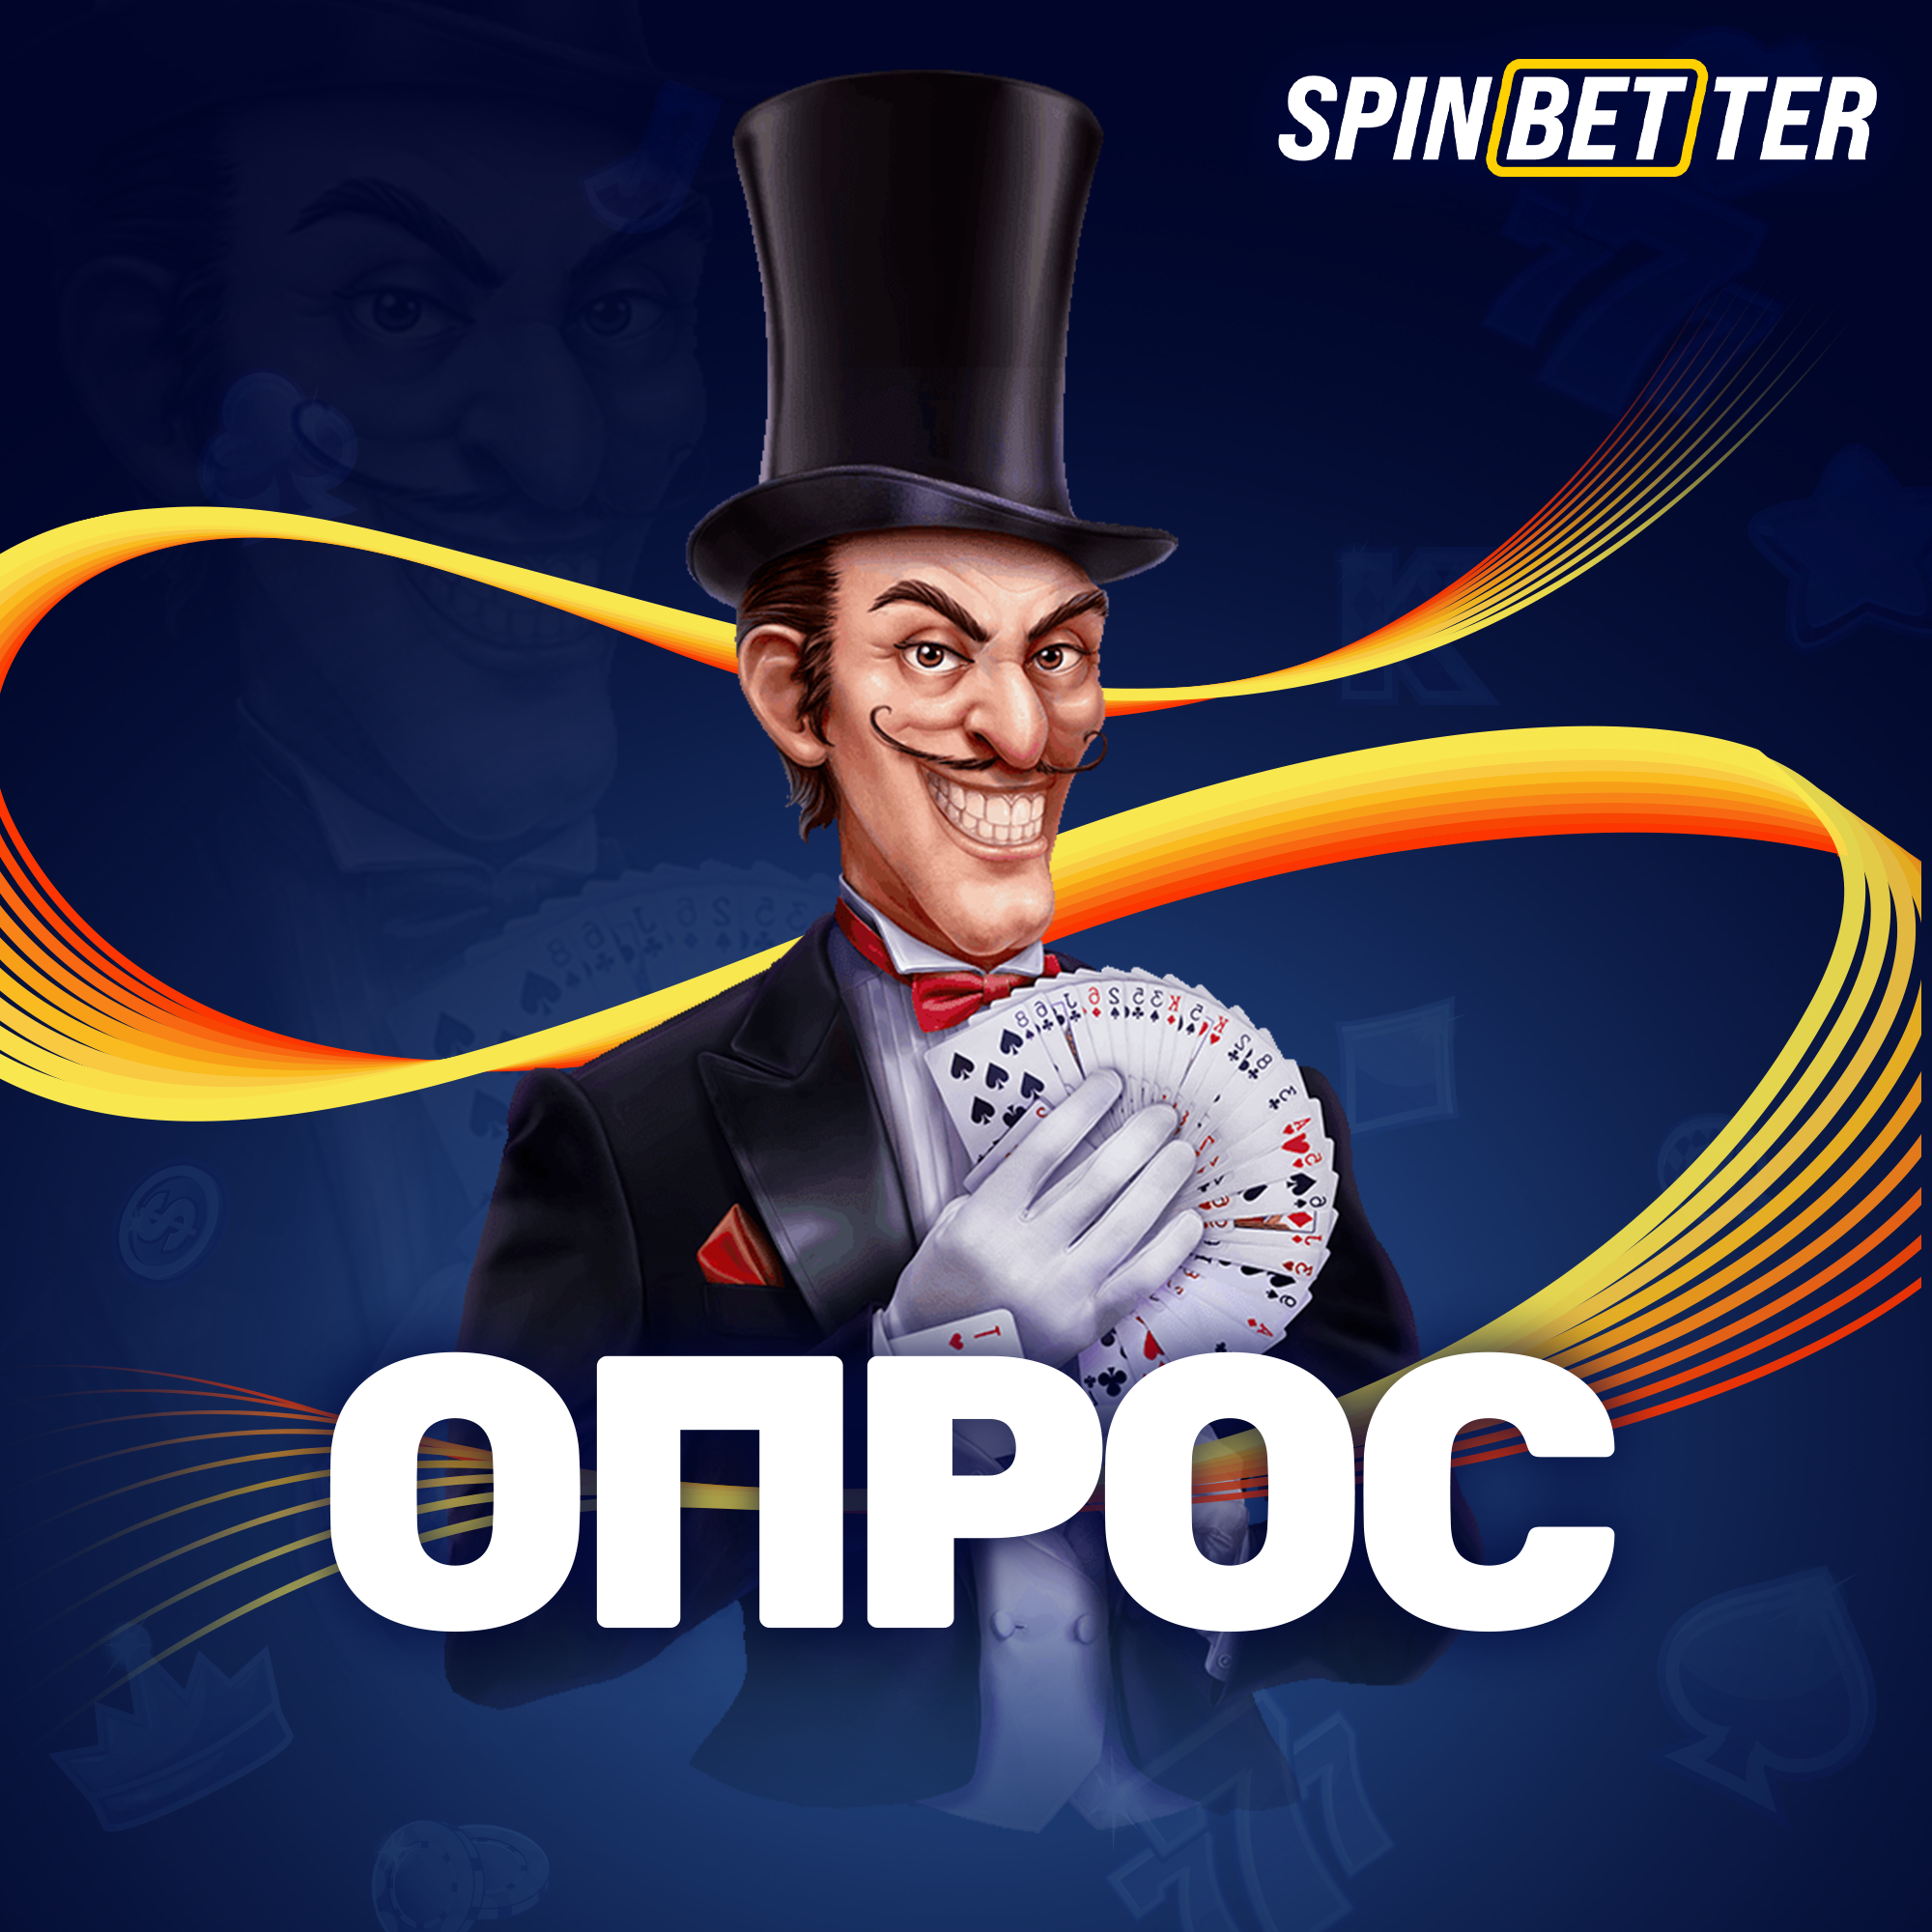 Spinbetter бездепозитный бонус buzz. SPINBETTER Casino бонус код.